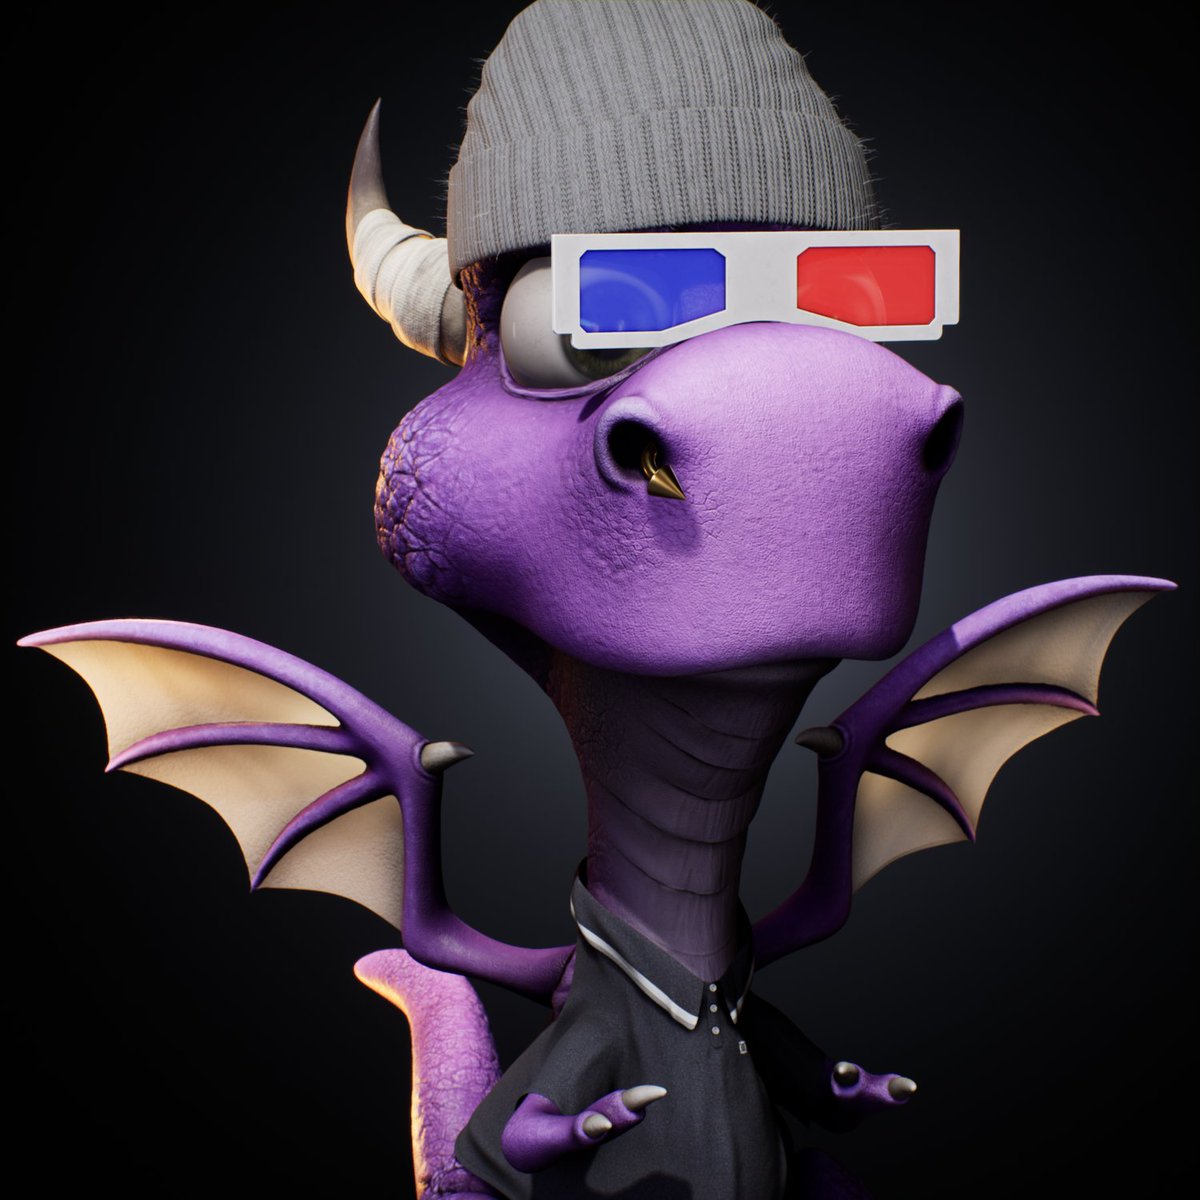 He is going to watch Avatar 3D in cinema! @DragonsArena_io #dragons